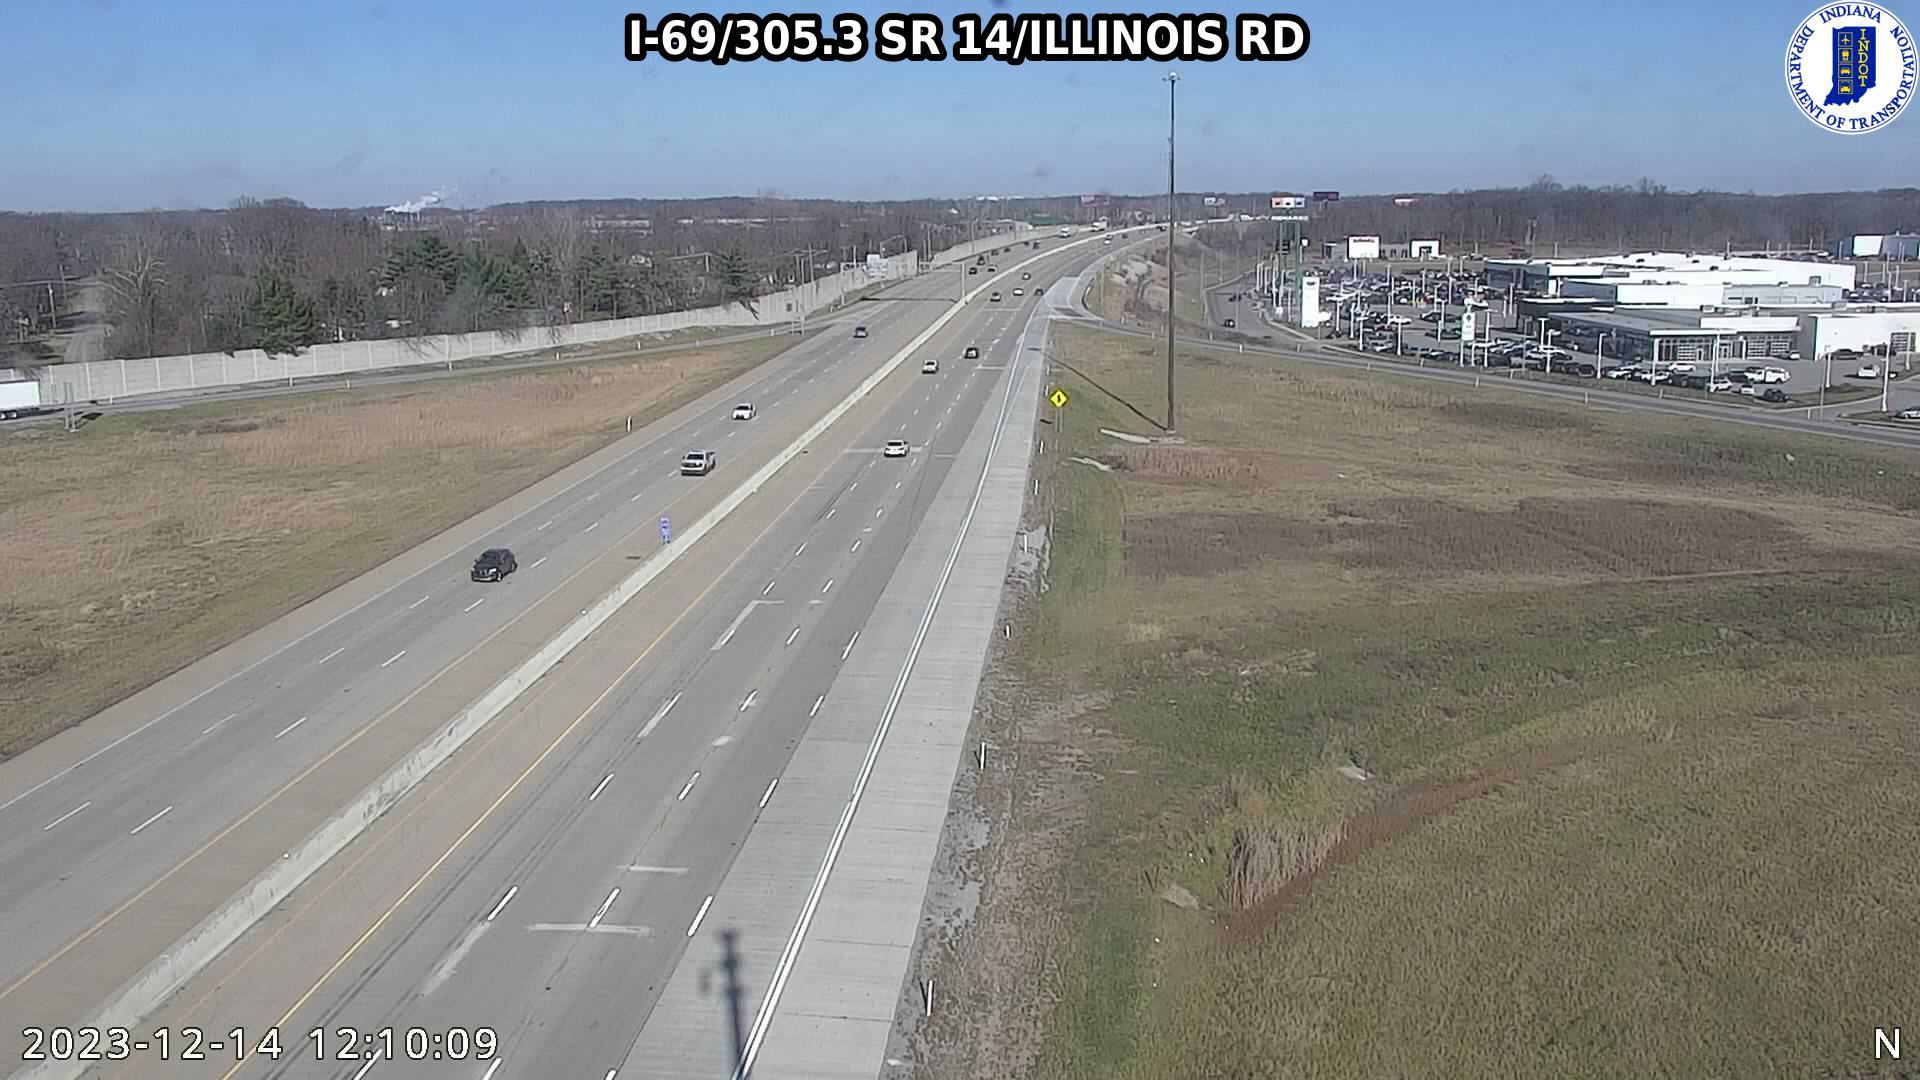 Fort Wayne: I-69: I-69/305.3 SR 14/ILLINOIS RD Traffic Camera